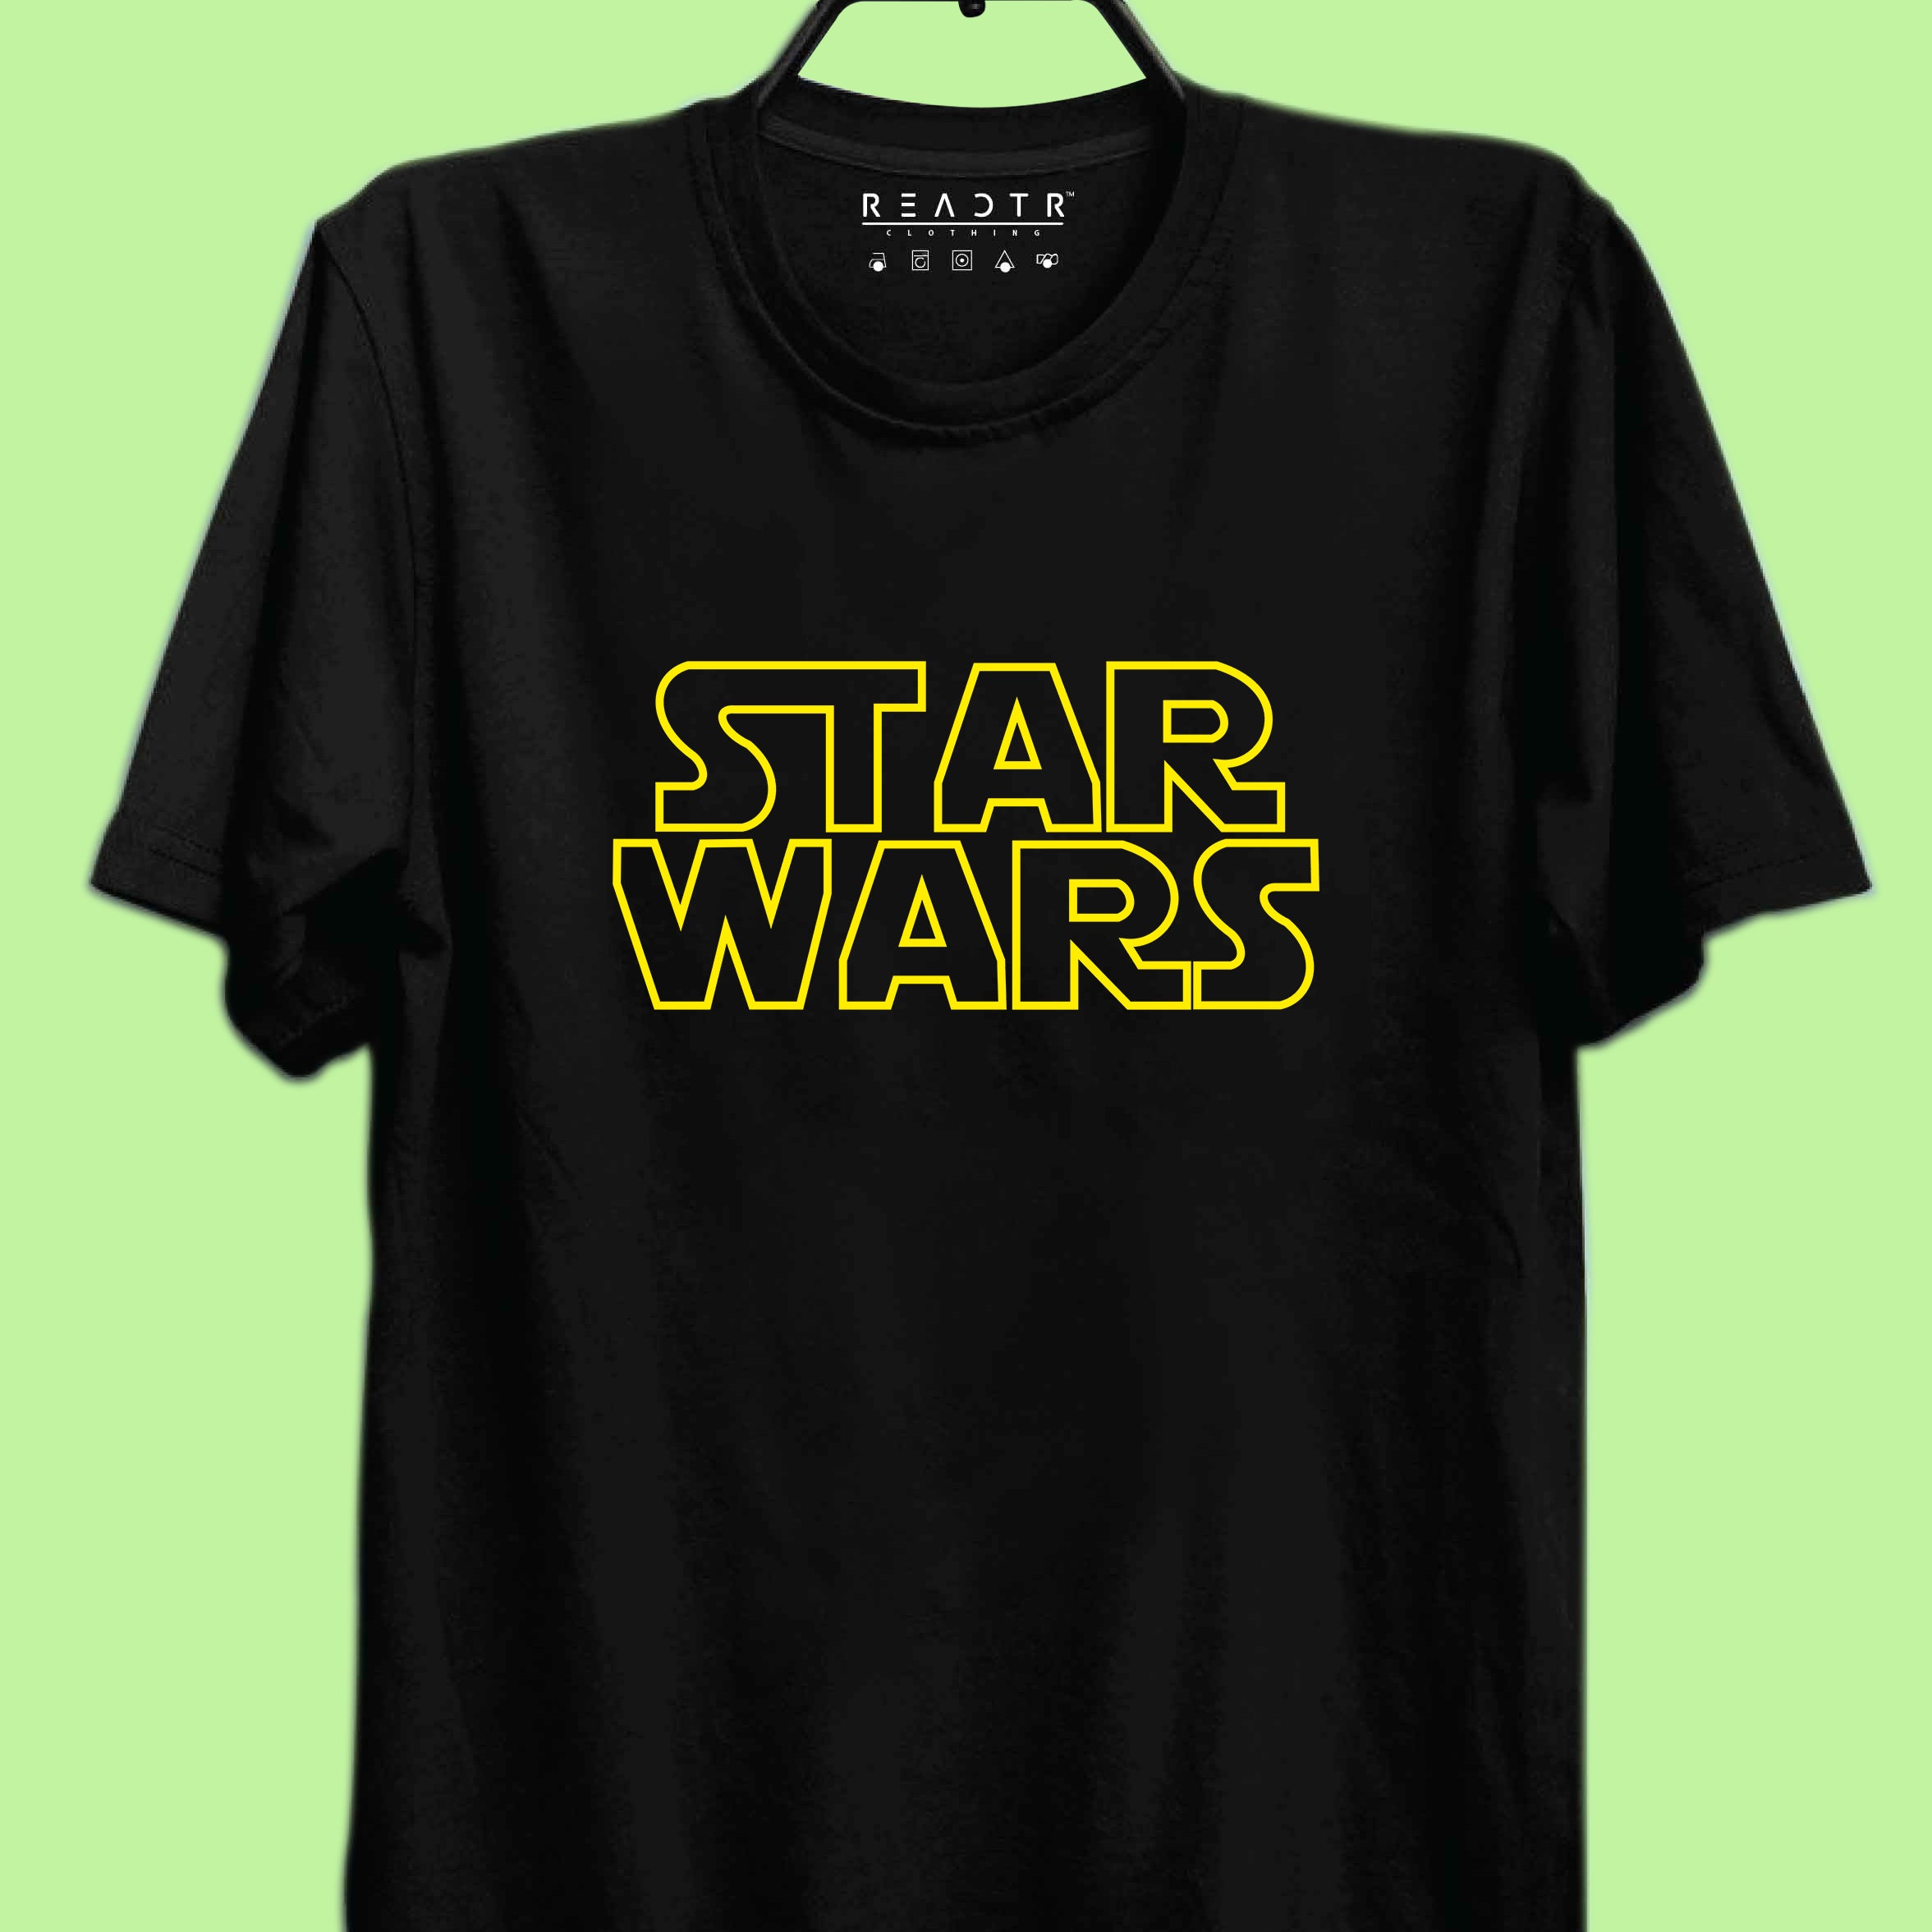 Star Wars Reactr Tshirts For Men - Eyewearlabs